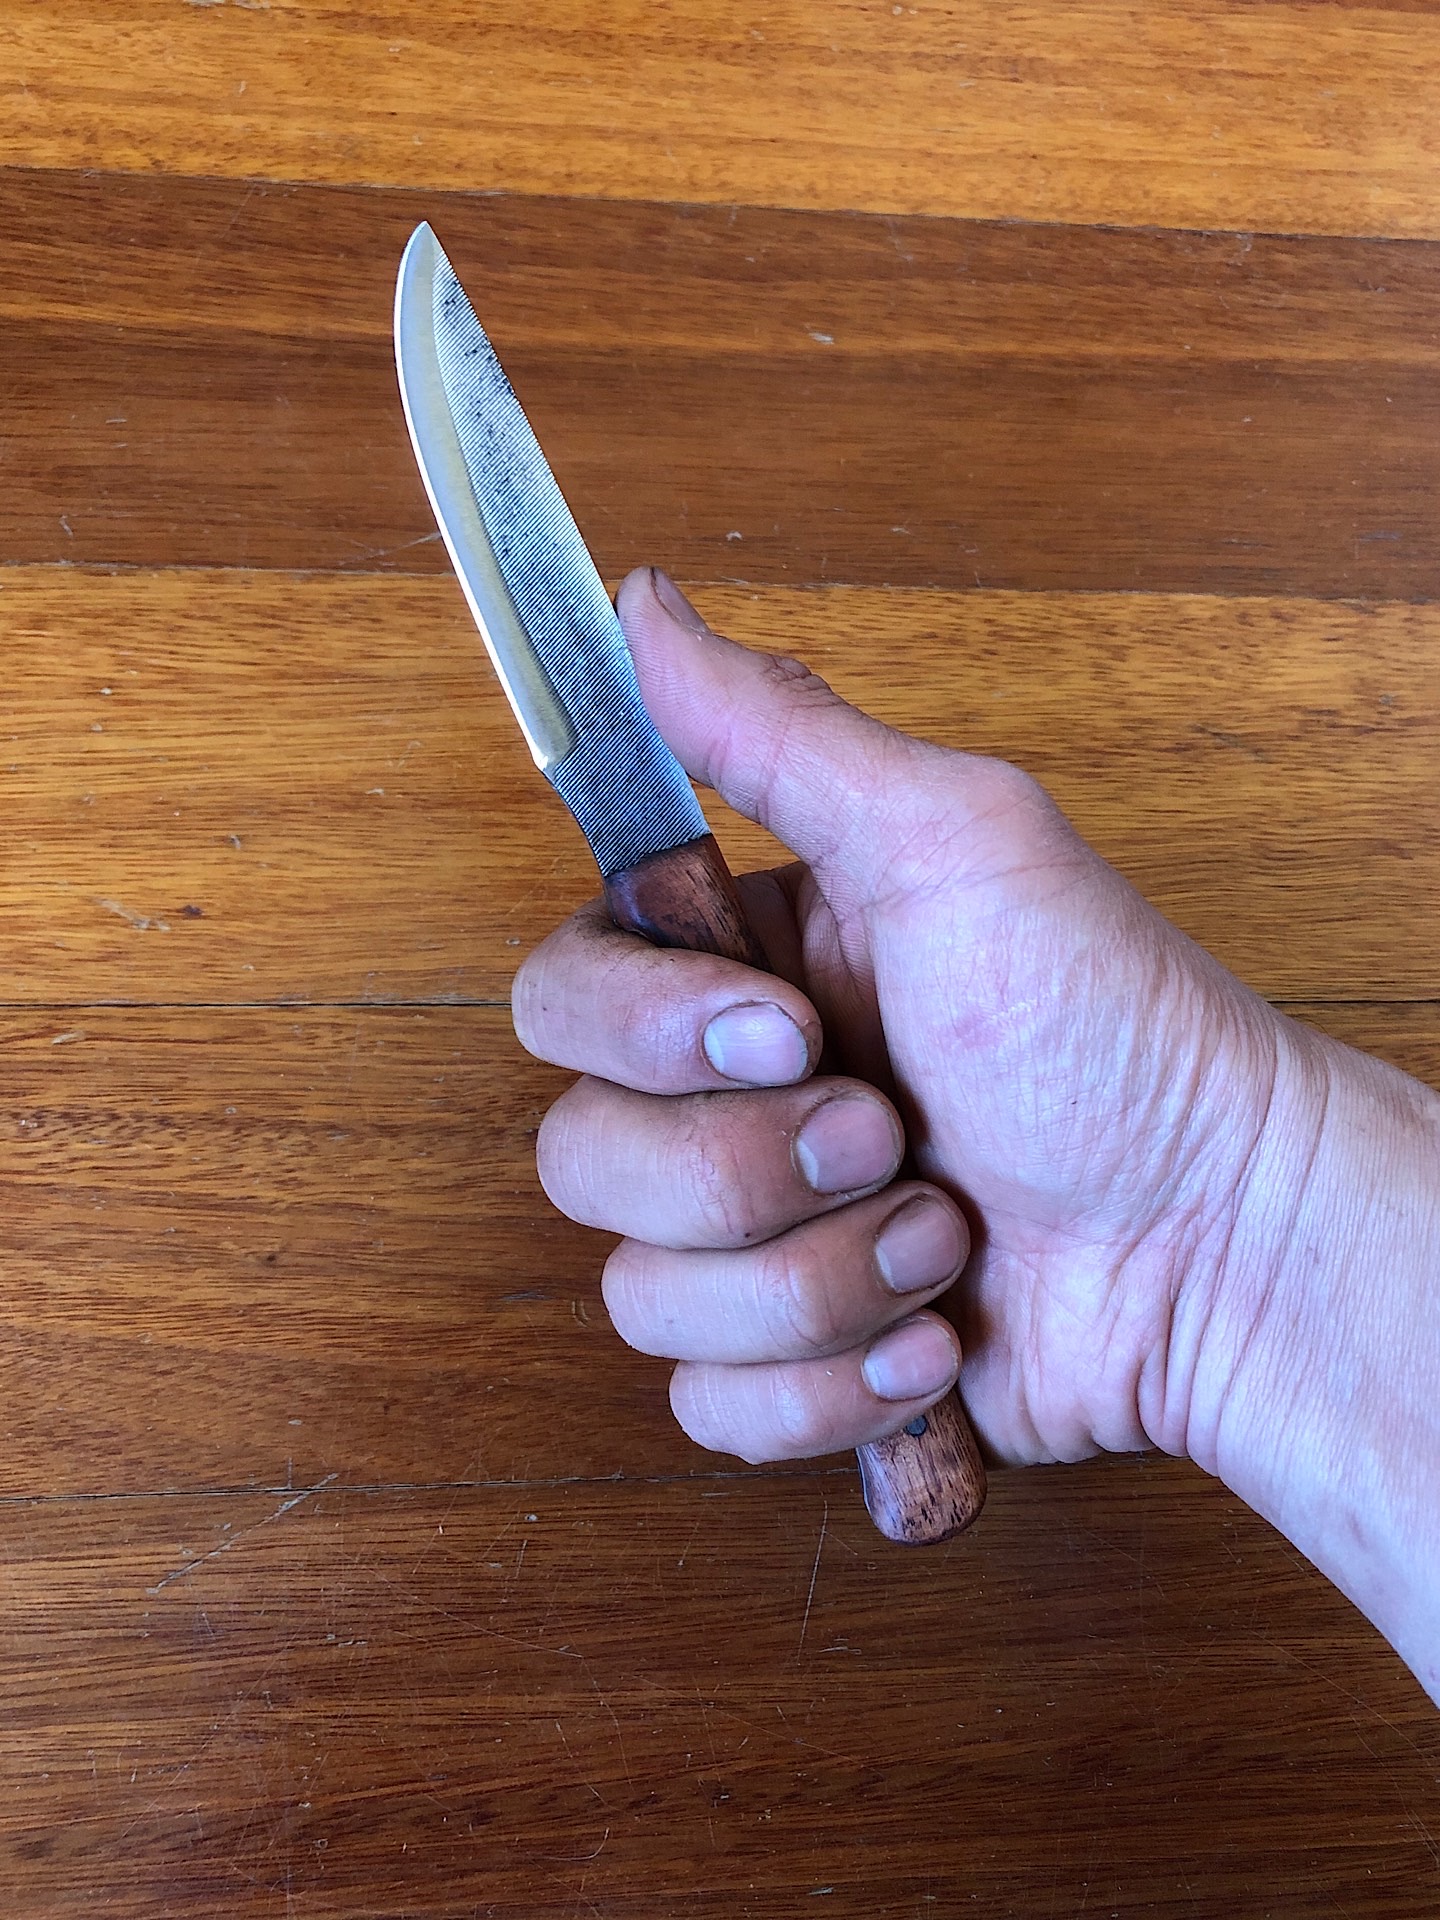 Holding my homemade knife